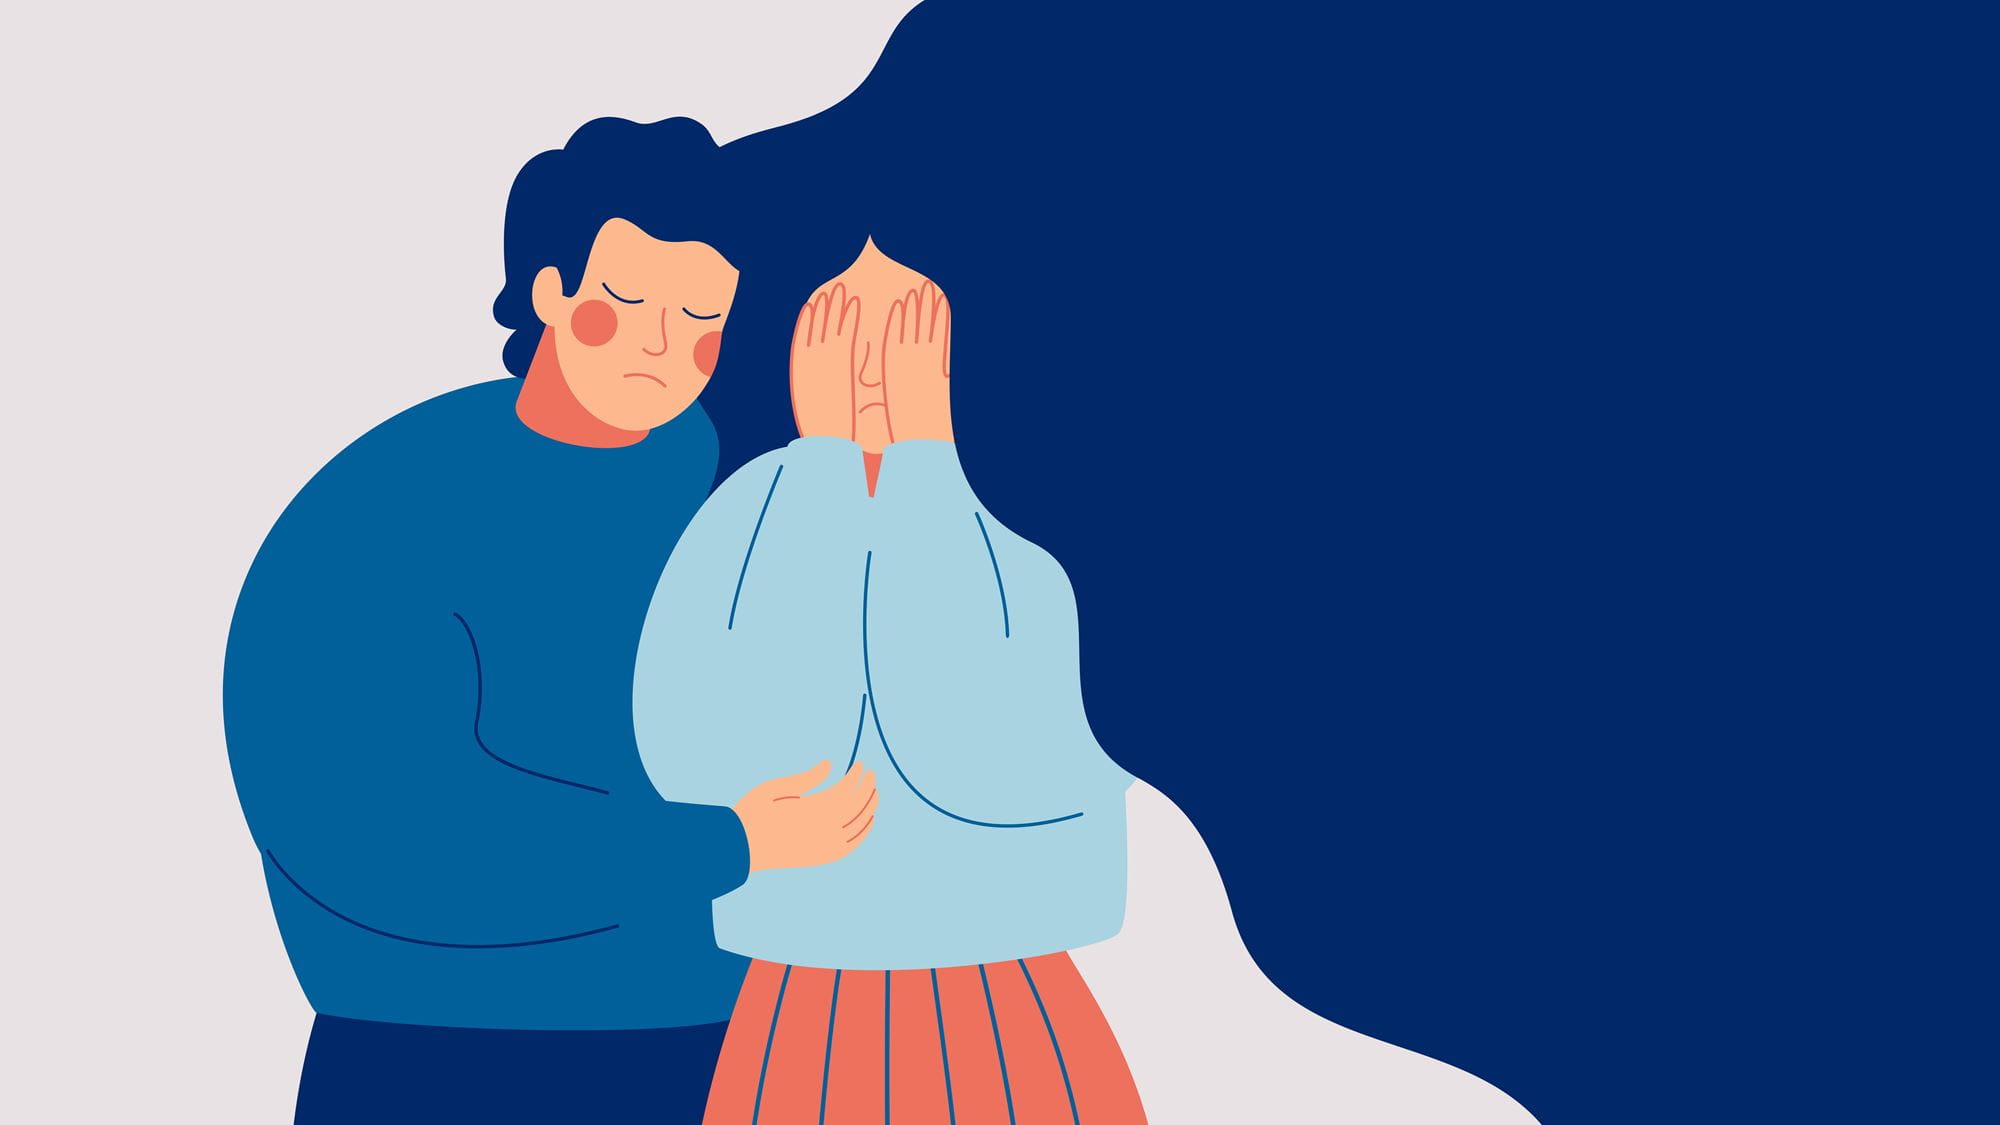 man comforting woman illustration 16x9